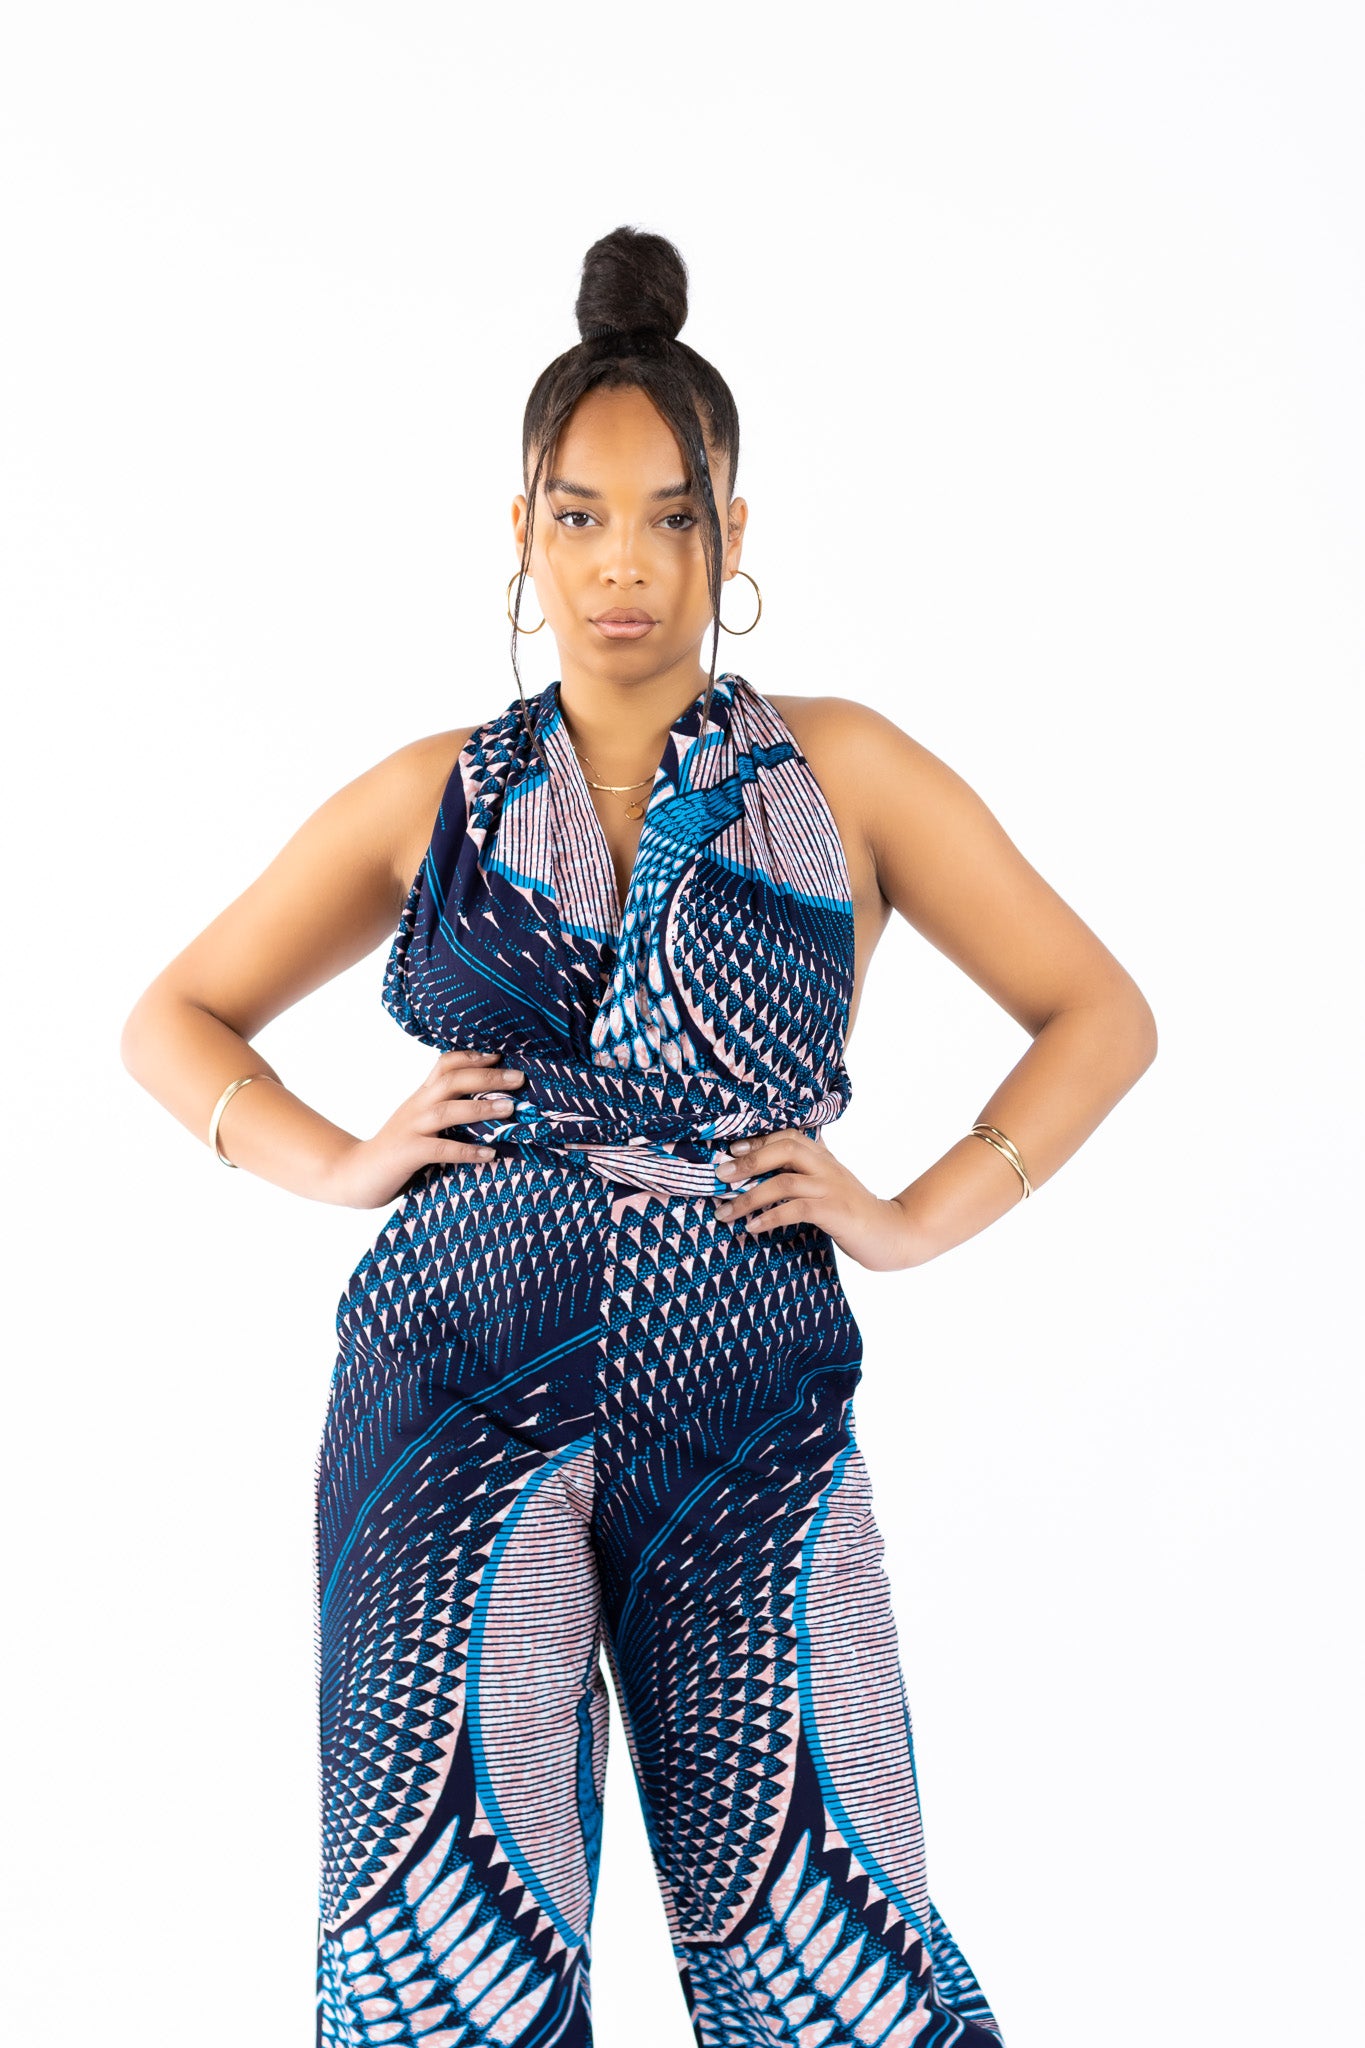 African Print Jumpsuit – Diva's Den Fashion, LLC